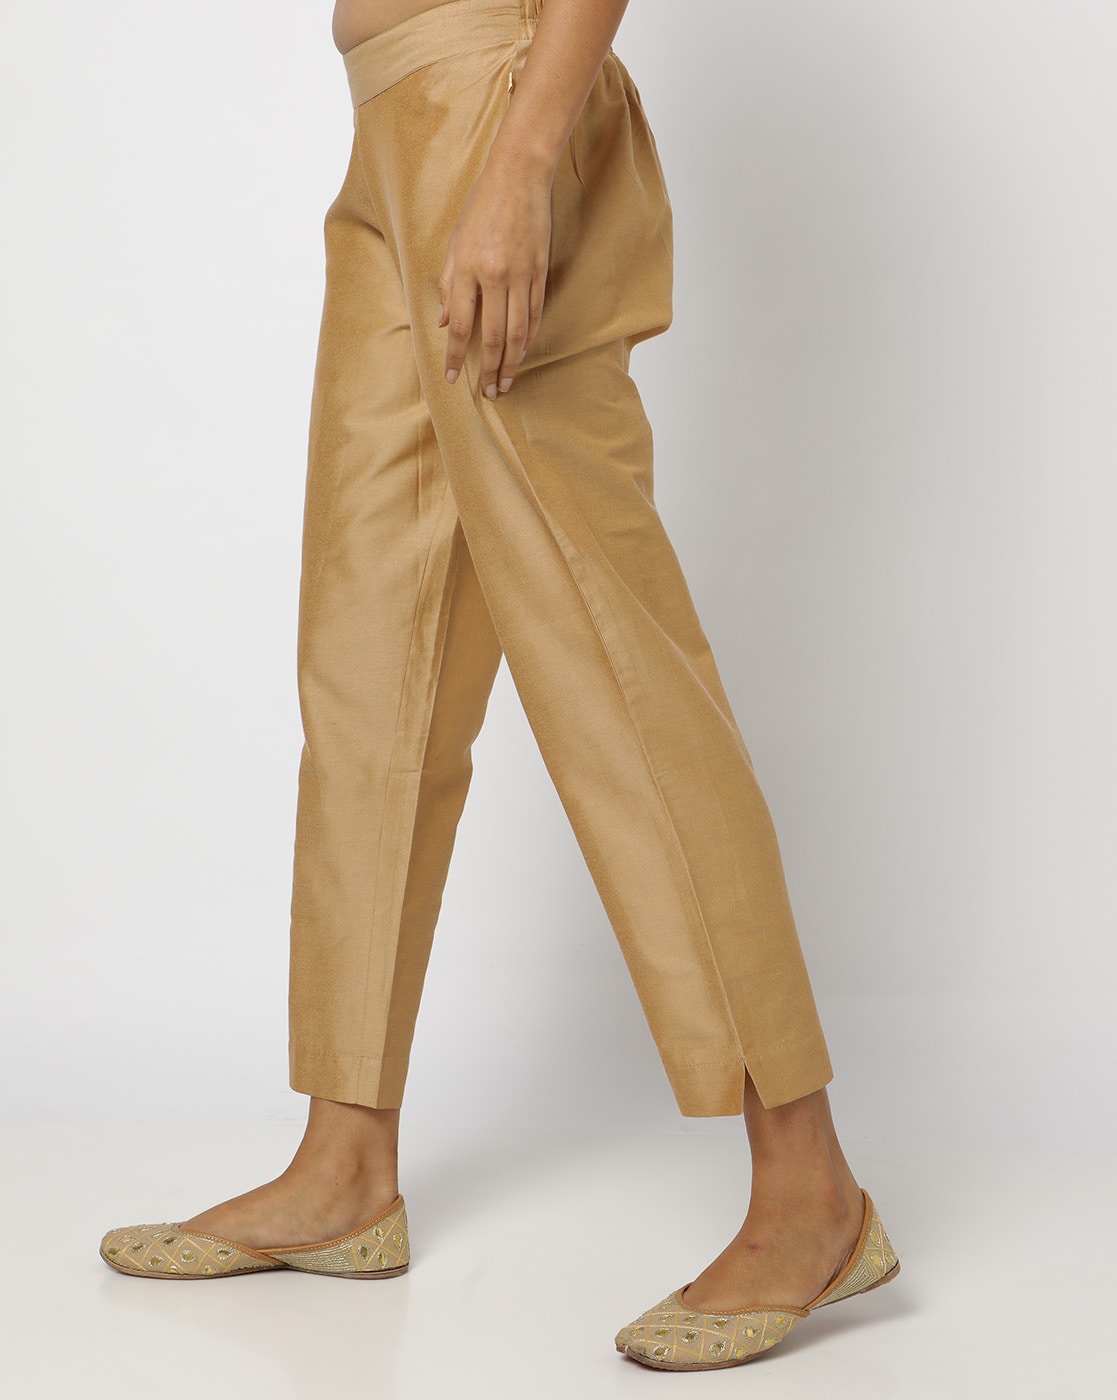 Smarty Pants women's silk satin rose gold color night suit pair.